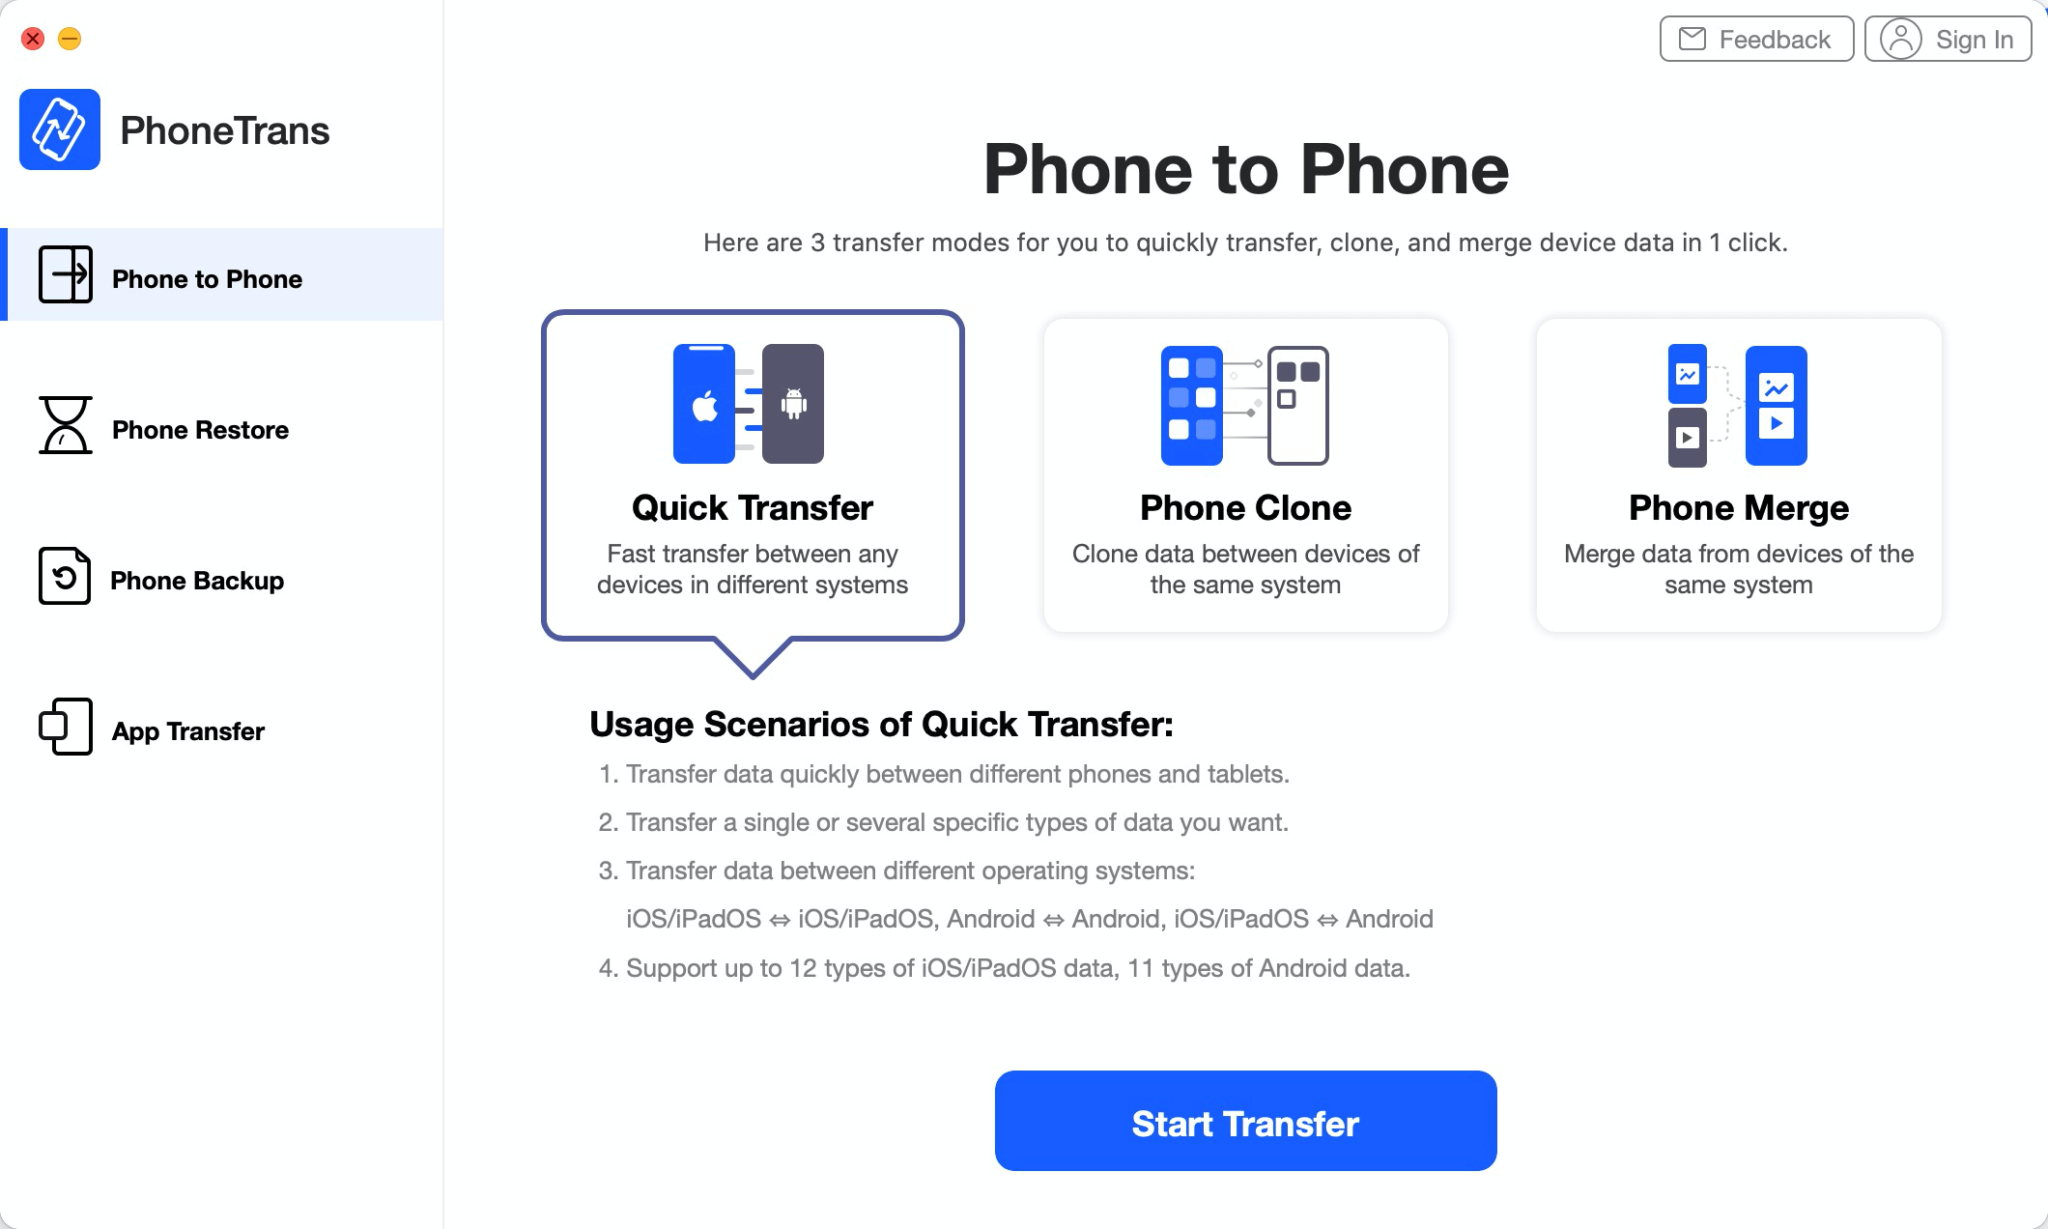 PhoneTrans Pro 5.3.1.20230628 instal the last version for apple